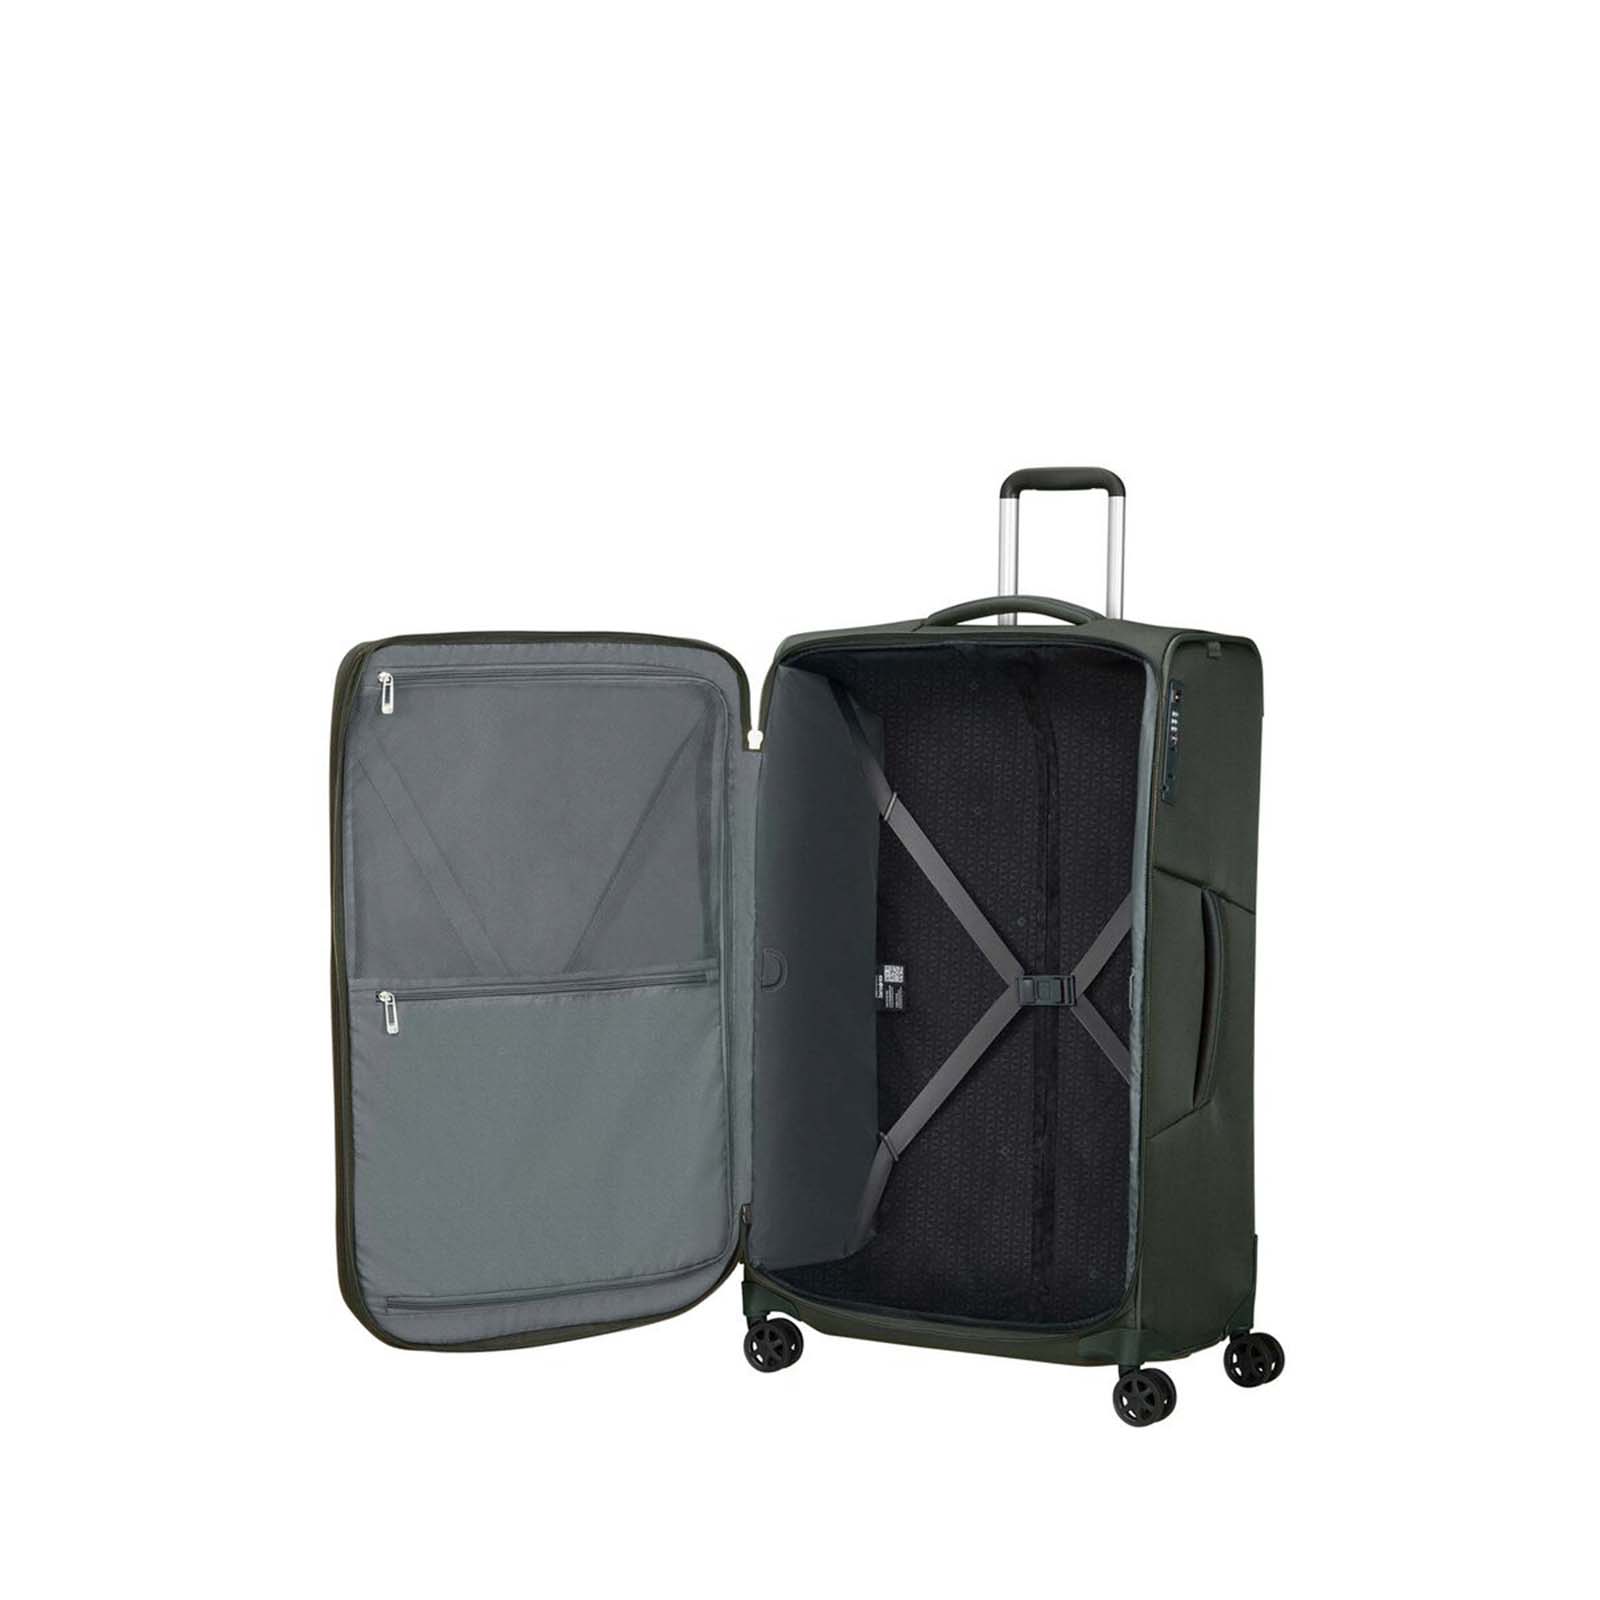 Samsonite-Respark-78cm-Suitcase-Forest-Green-Open